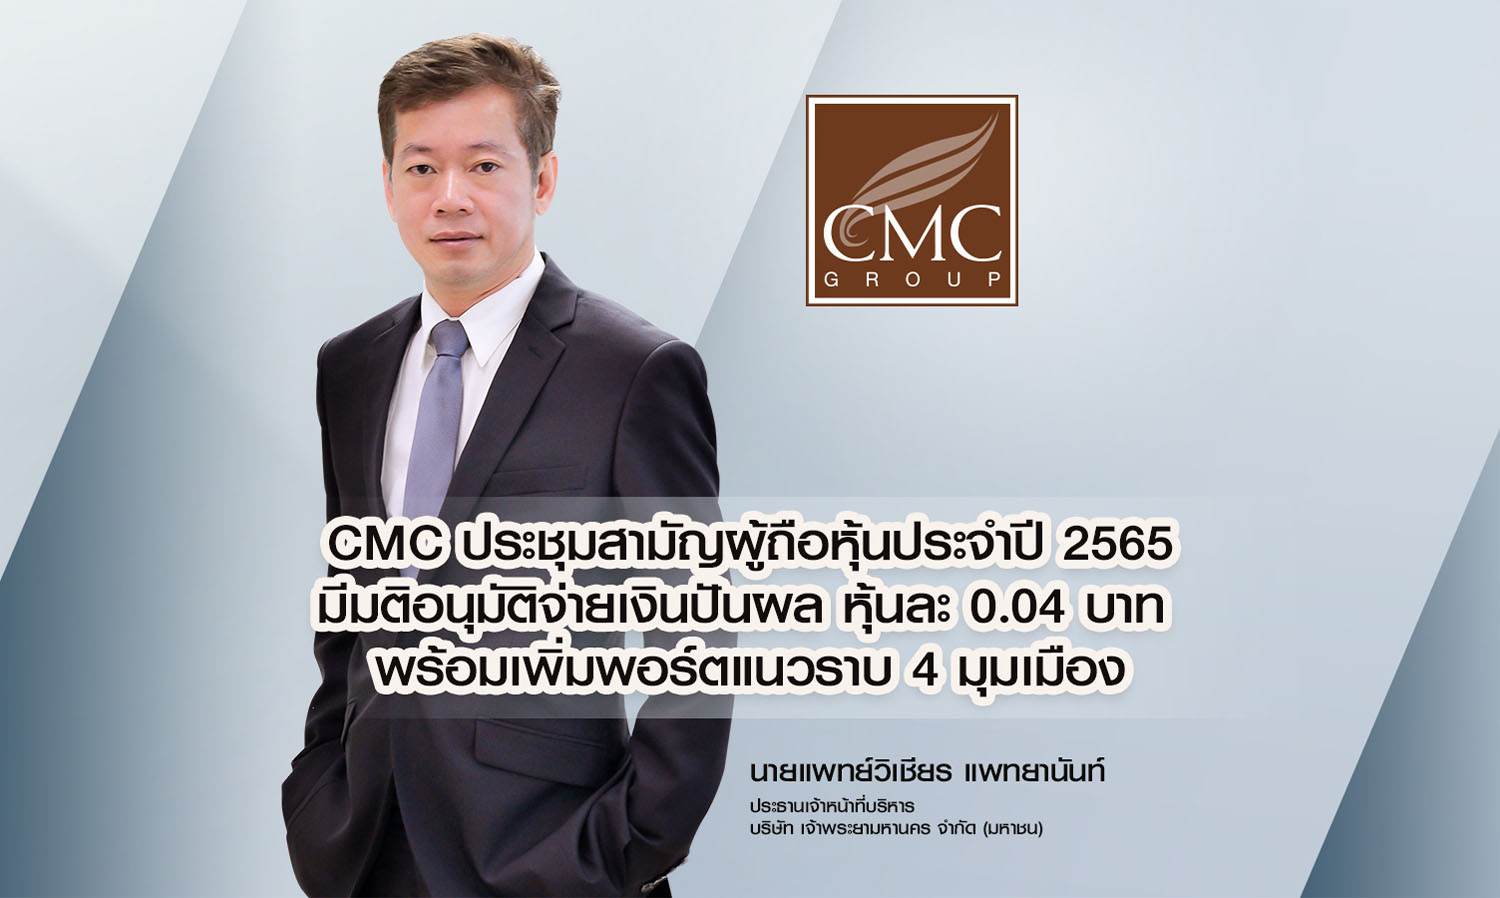 “CMC” มีมติอนุมัติจ่ายเงินปันผล หุ้นละ 0.04 บาท พร้อมเพิ่มพอร์ตแนวราบ 4 มุมเมือง  ย้ำความเป็นผู้นำการพัฒนาอสังหาริมทรัพย์ไทย